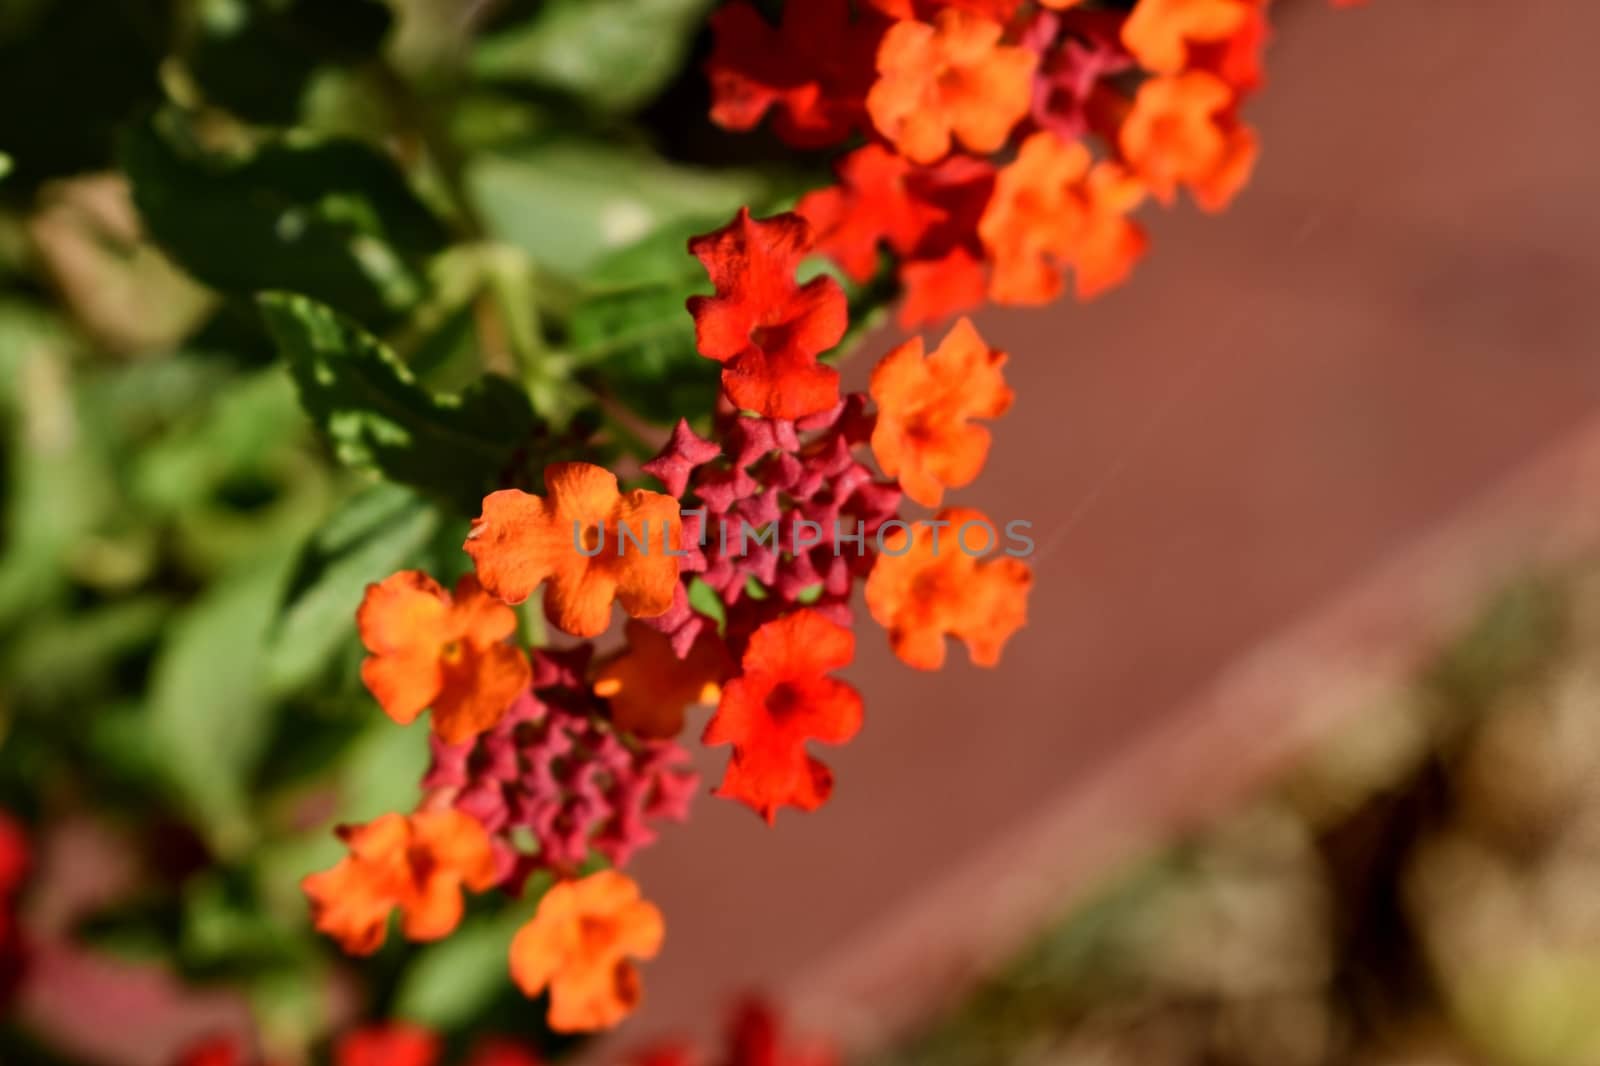 Flower bloomed in my garden by ravindrabhu165165@gmail.com